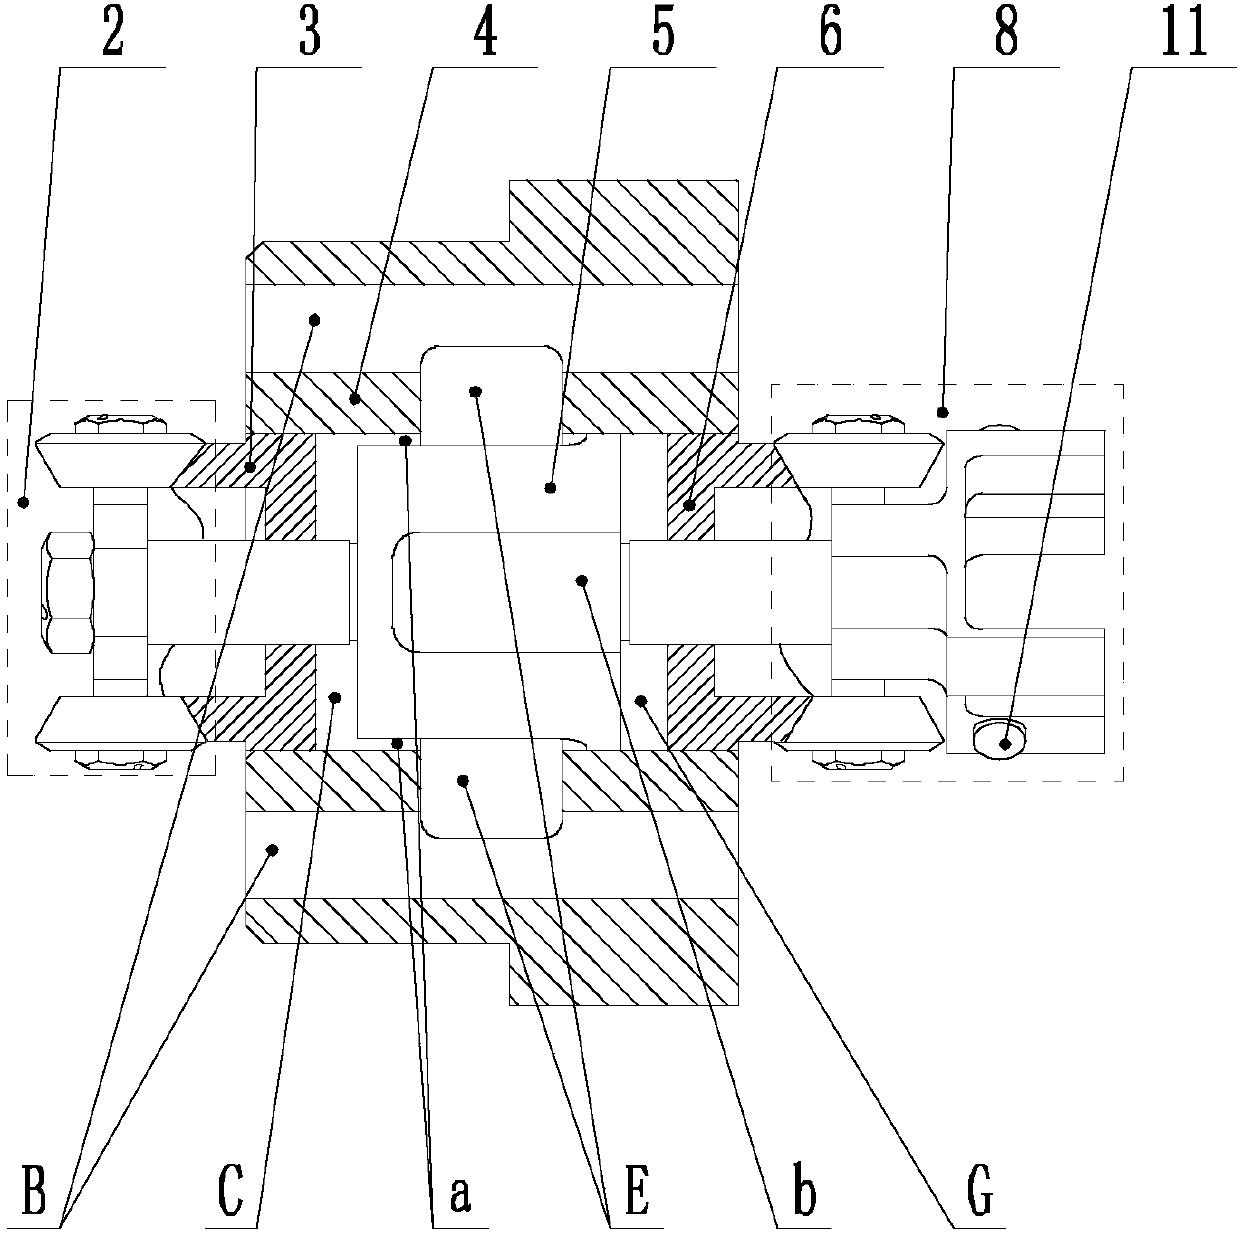 Double-link two-dimensional piston type flowmeter